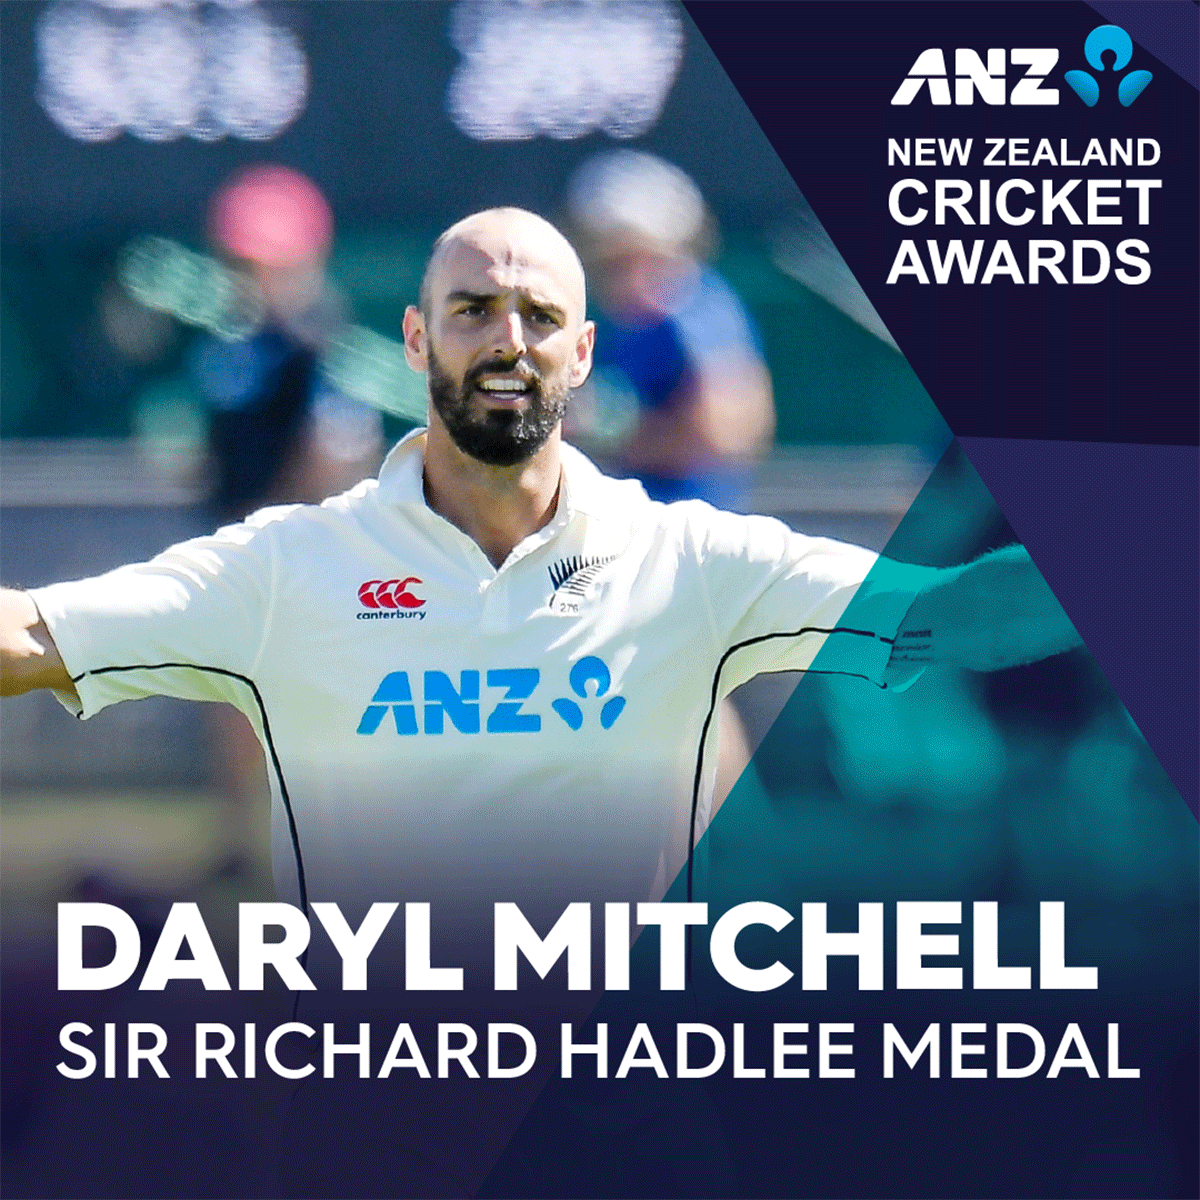 Daryl Mitchell won the Sir Richard Hadlee medal